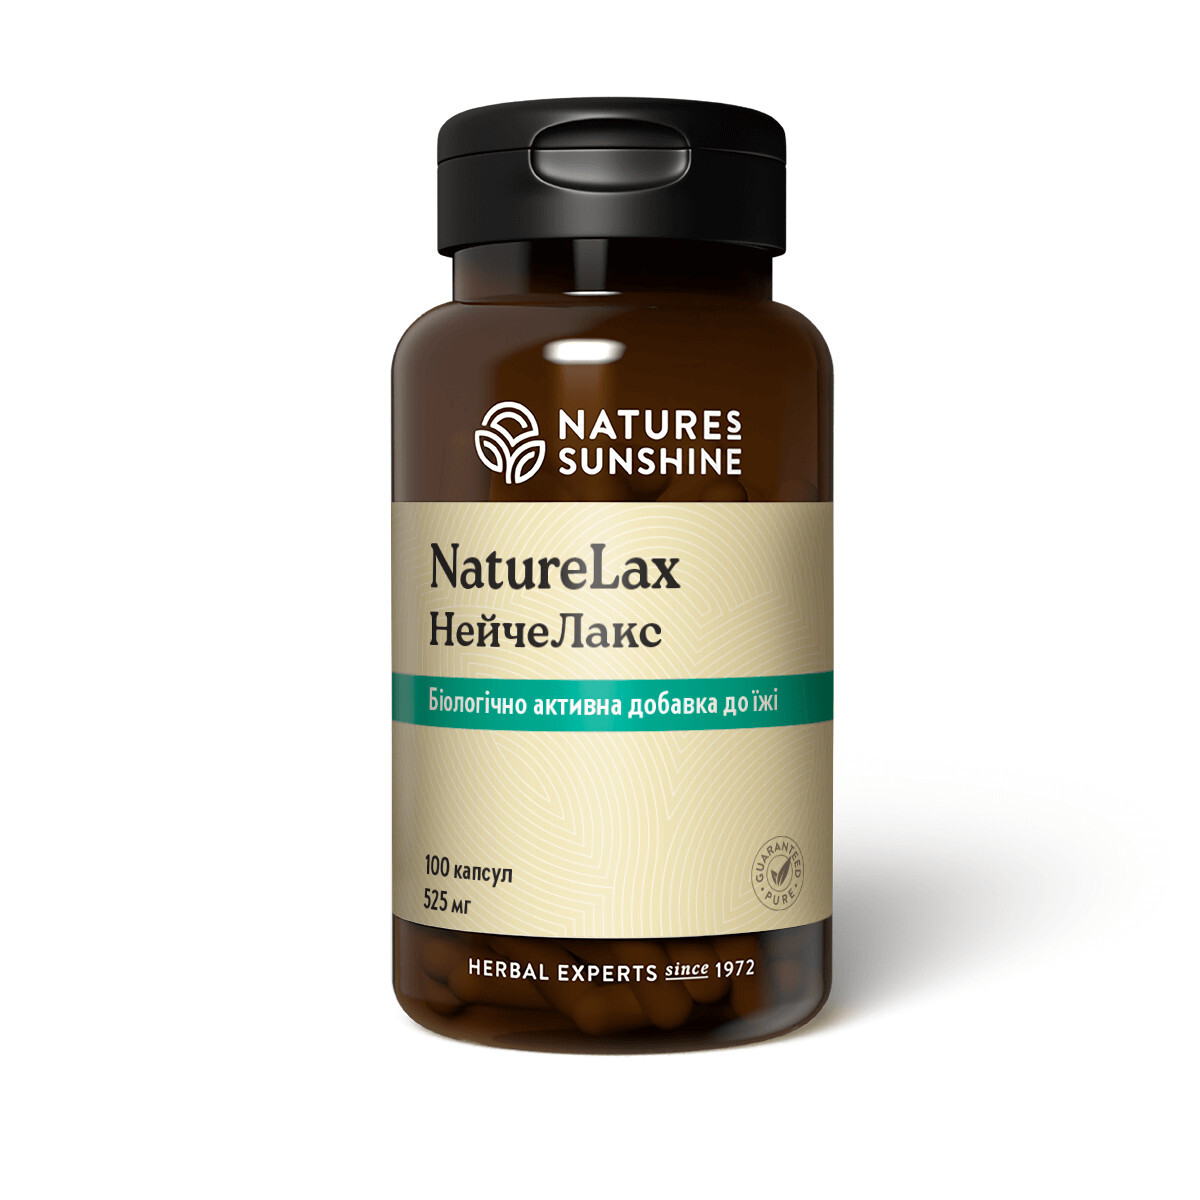 NatureLax* - НэйчеЛакс* - БАД Nature's Sunshine Products (NSP)